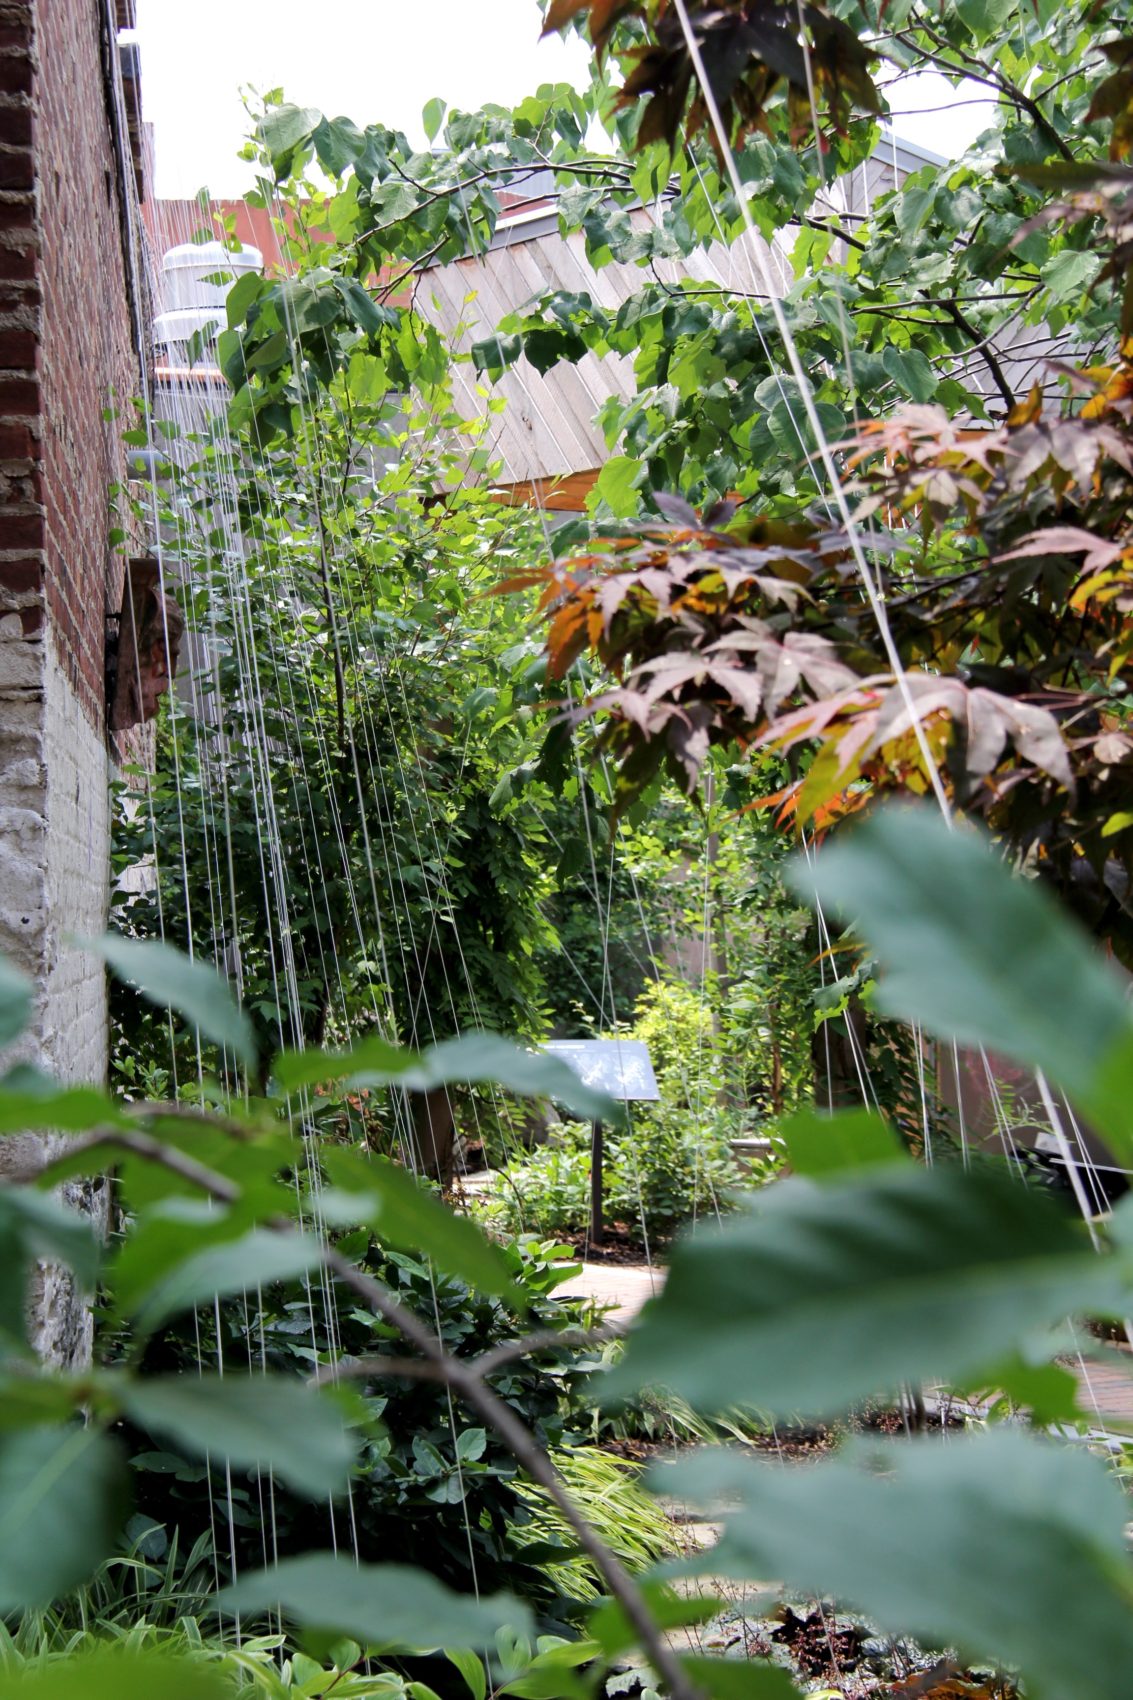 LEIMAY Works Qualia -gardens installation photos July 14th 2014. Photos by Shige Moriya - 08